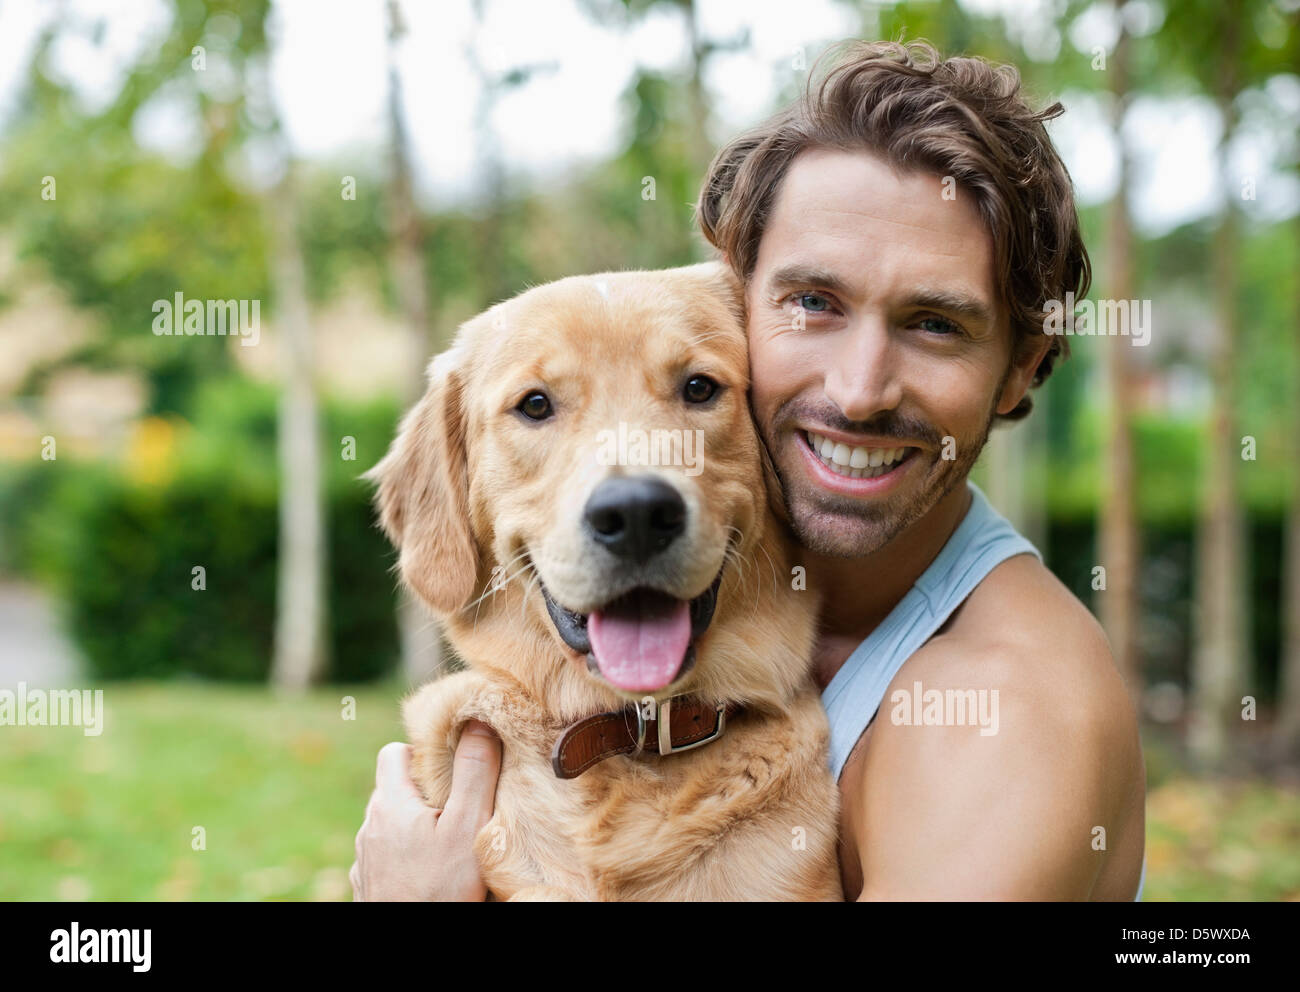 Smiling man petting dog outdoors Stock Photo